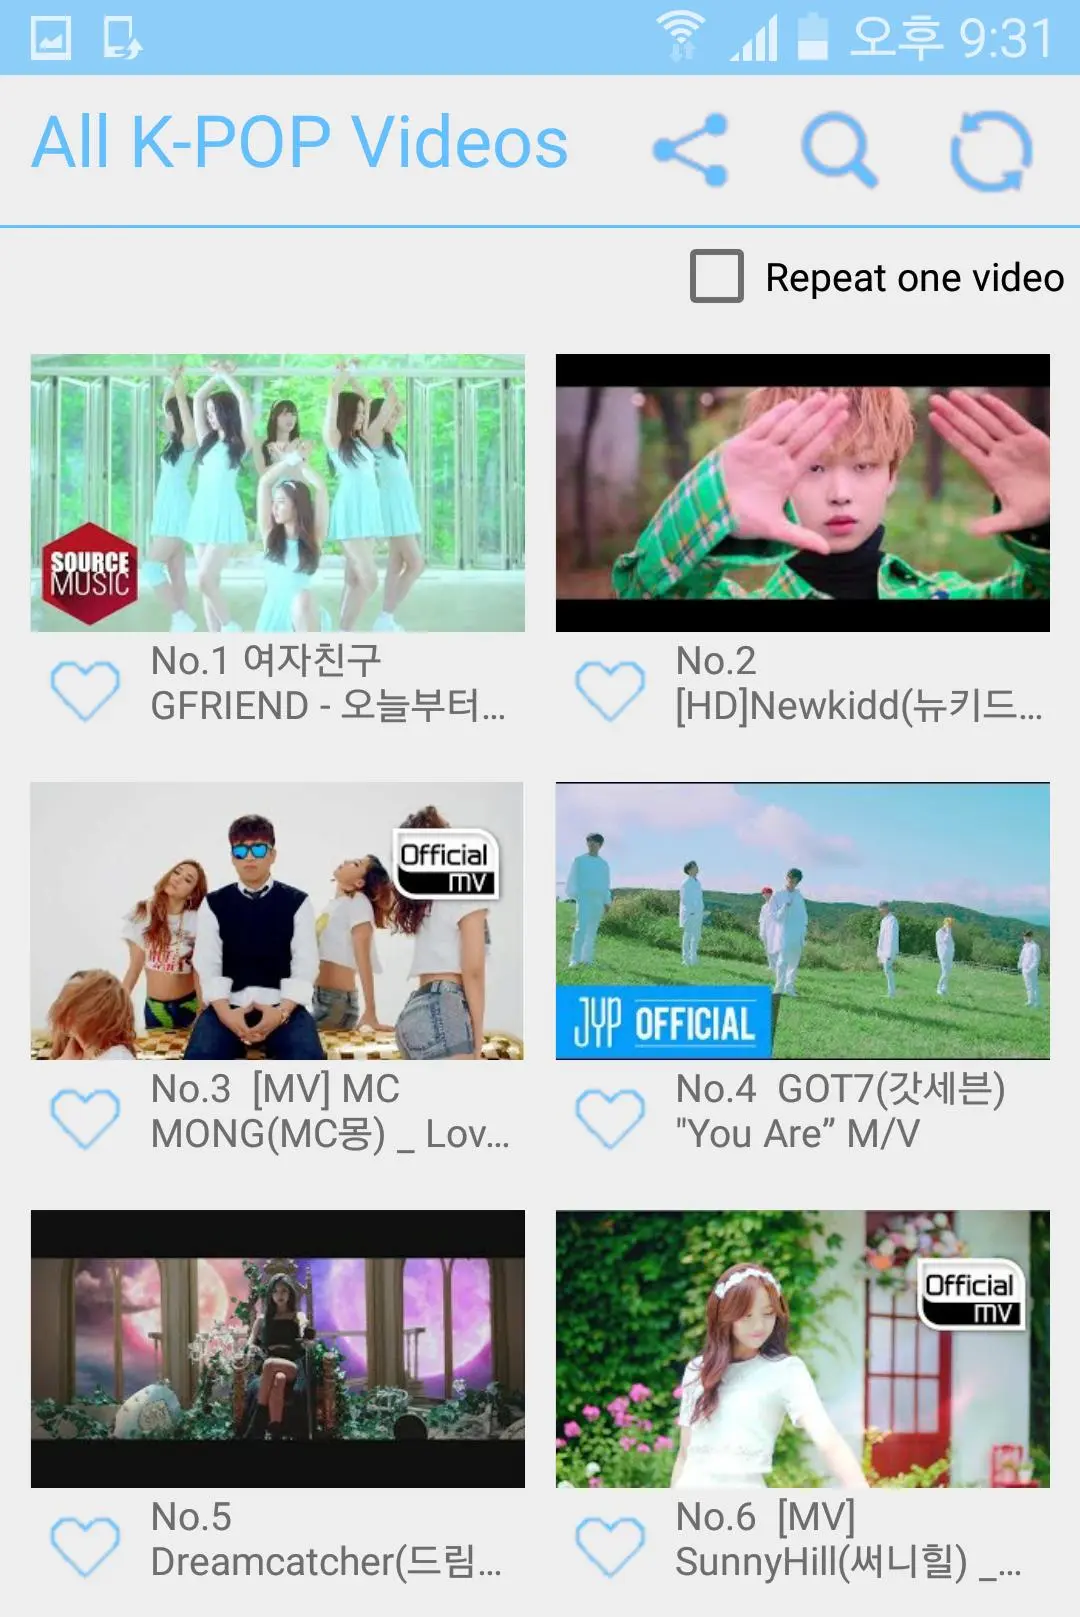 kpop music videos download